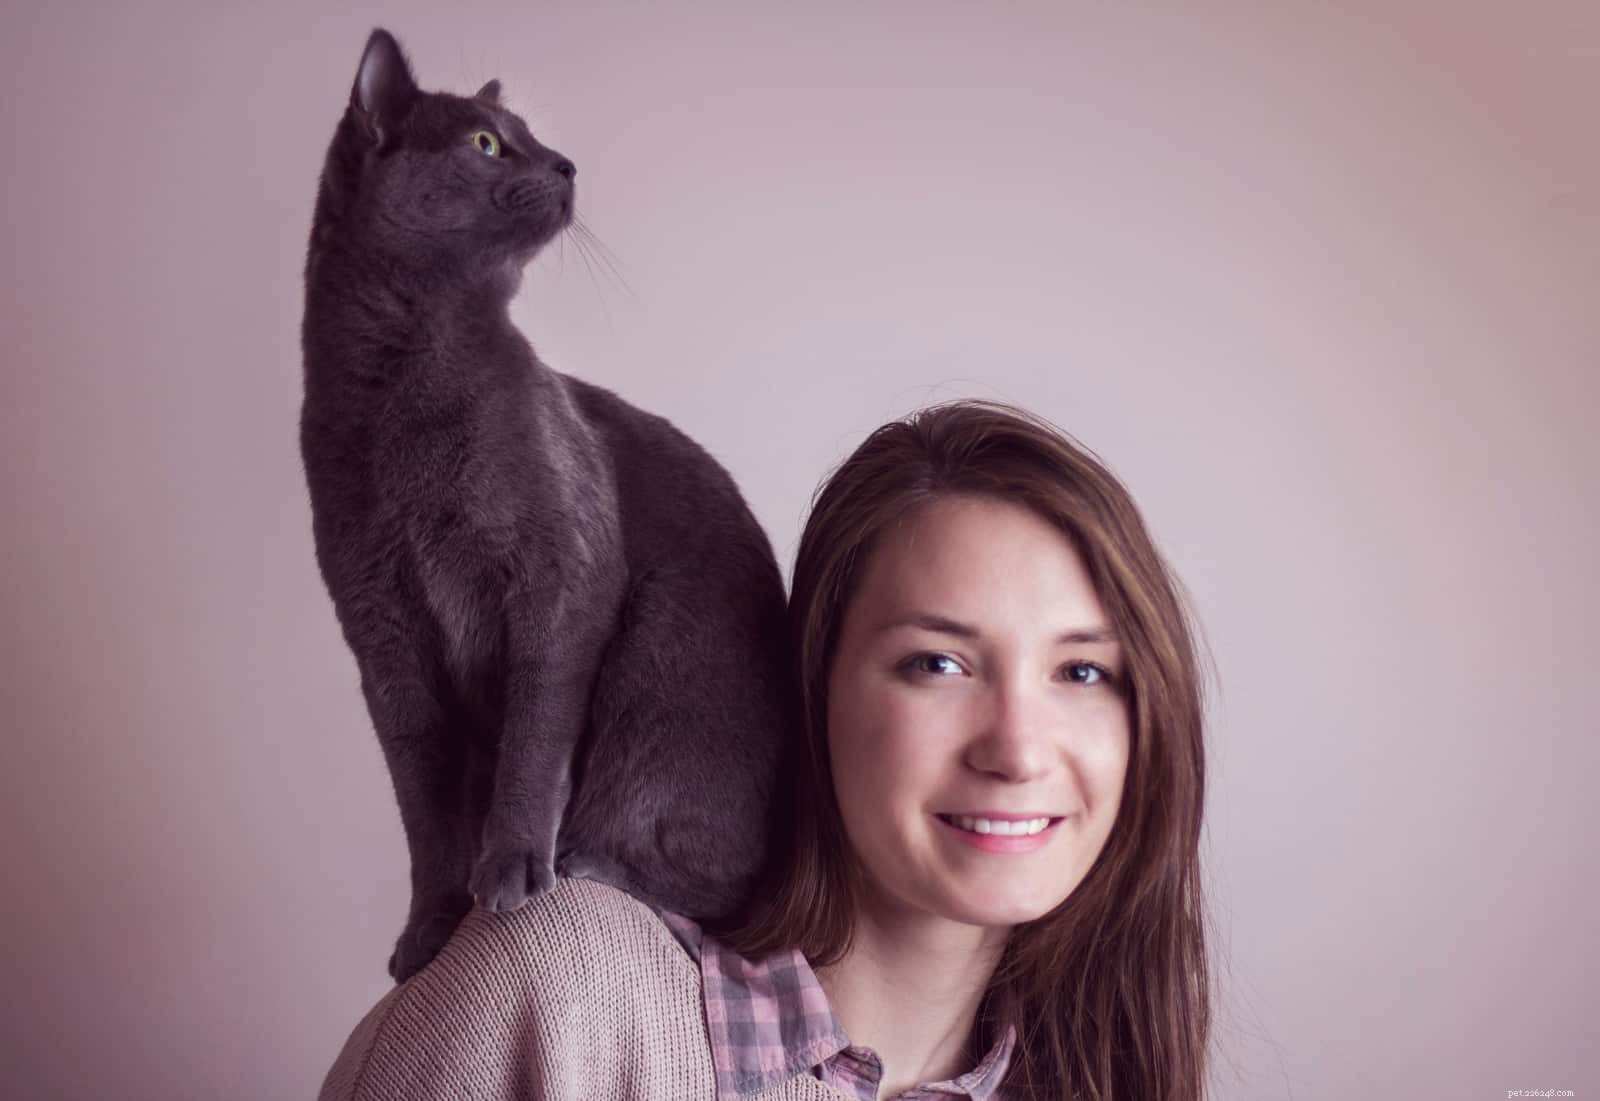 Proč kočky rády sedí na ramenou?